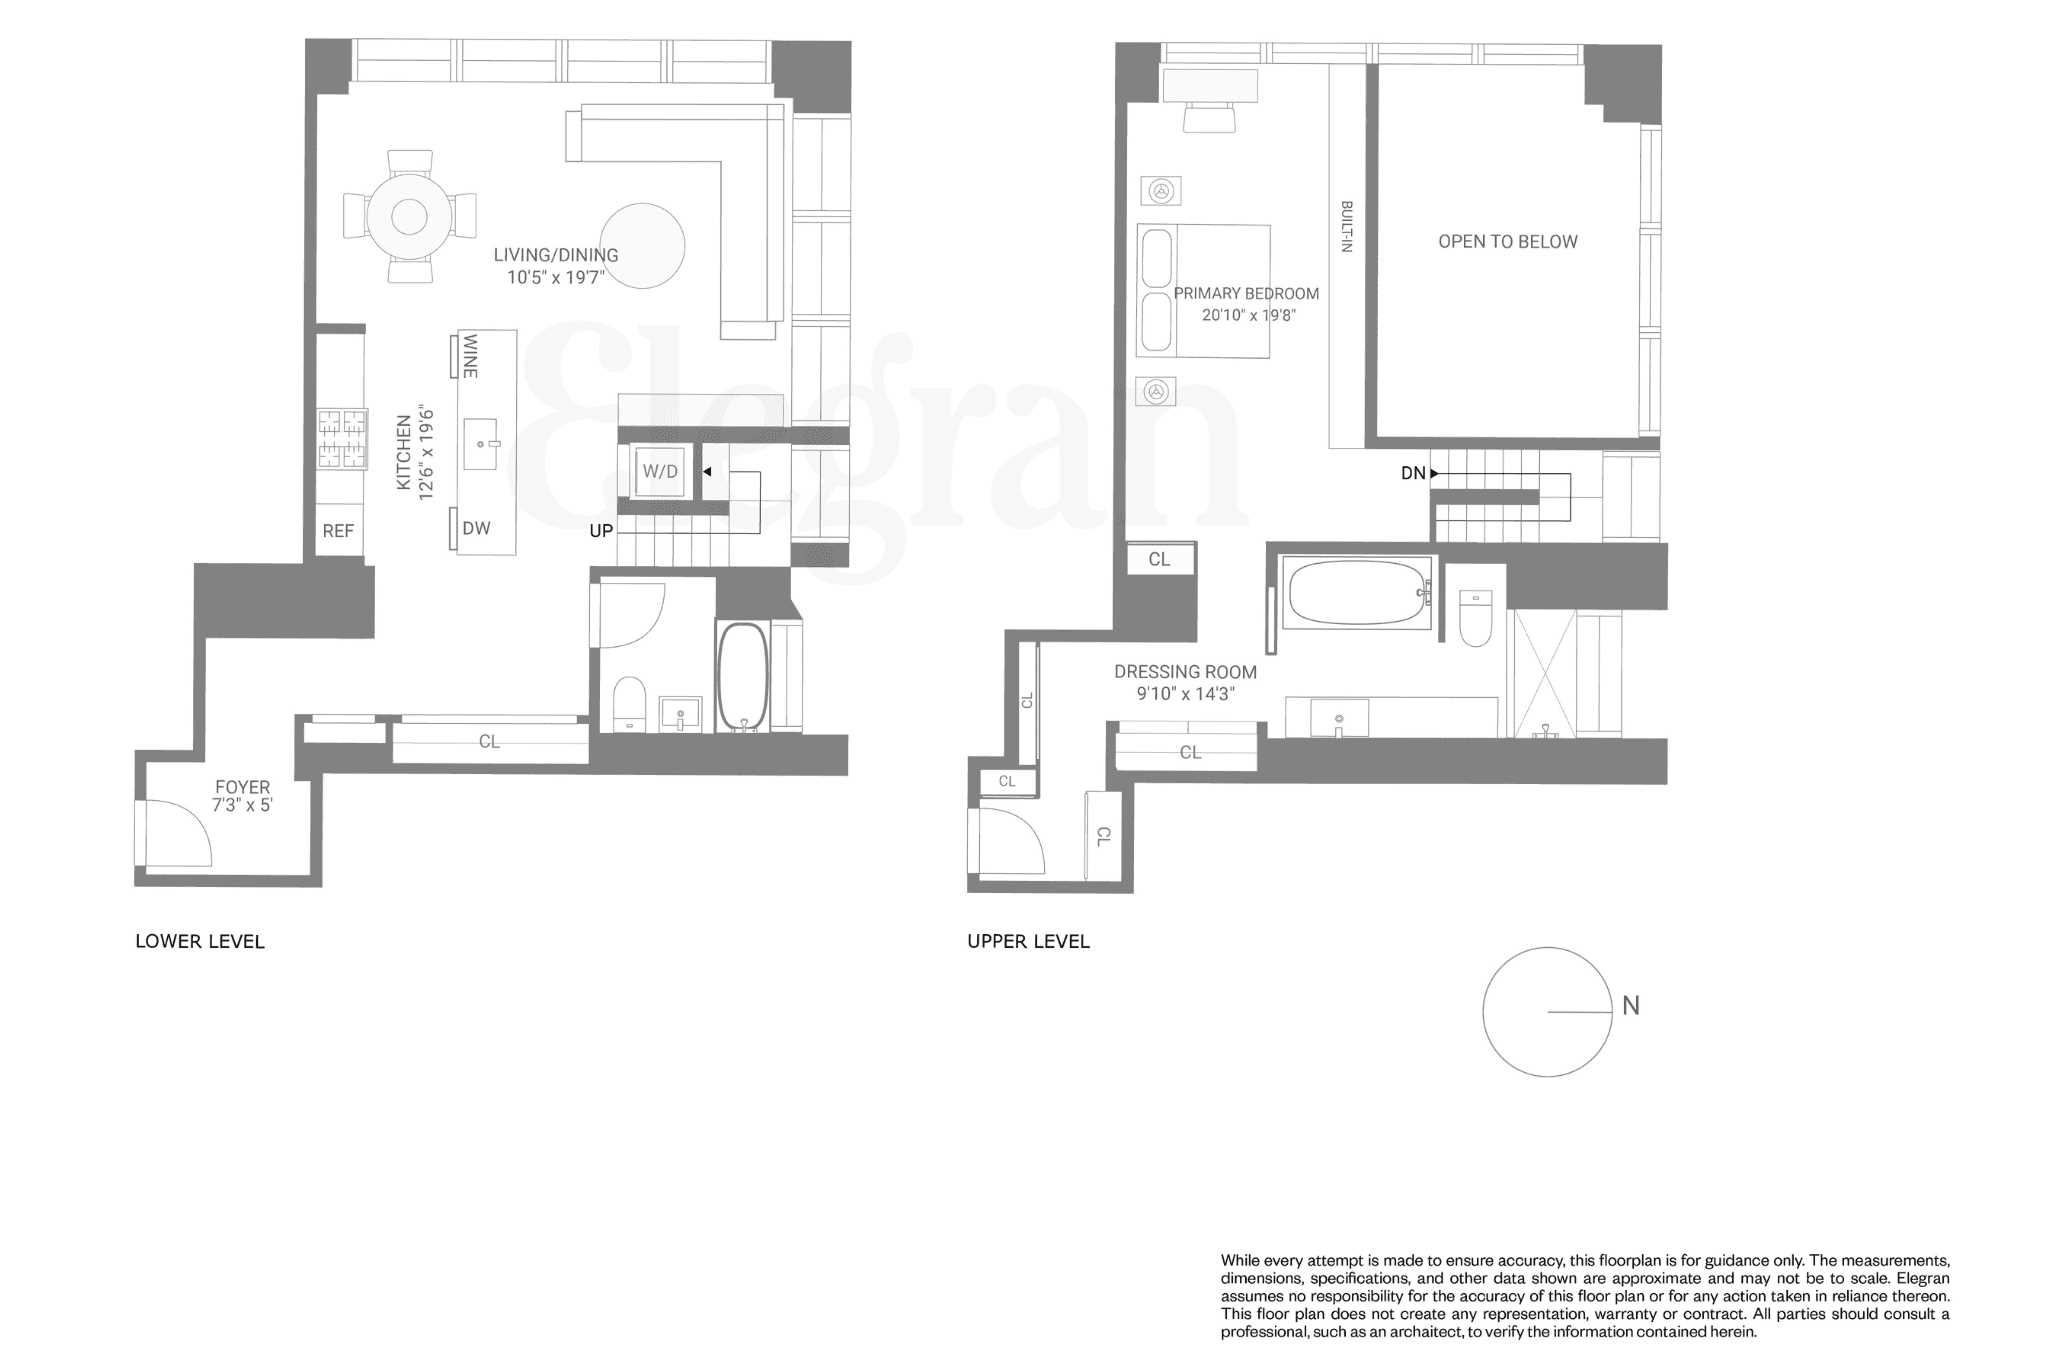 Floorplan for 456 West 19th Street, 4/5D